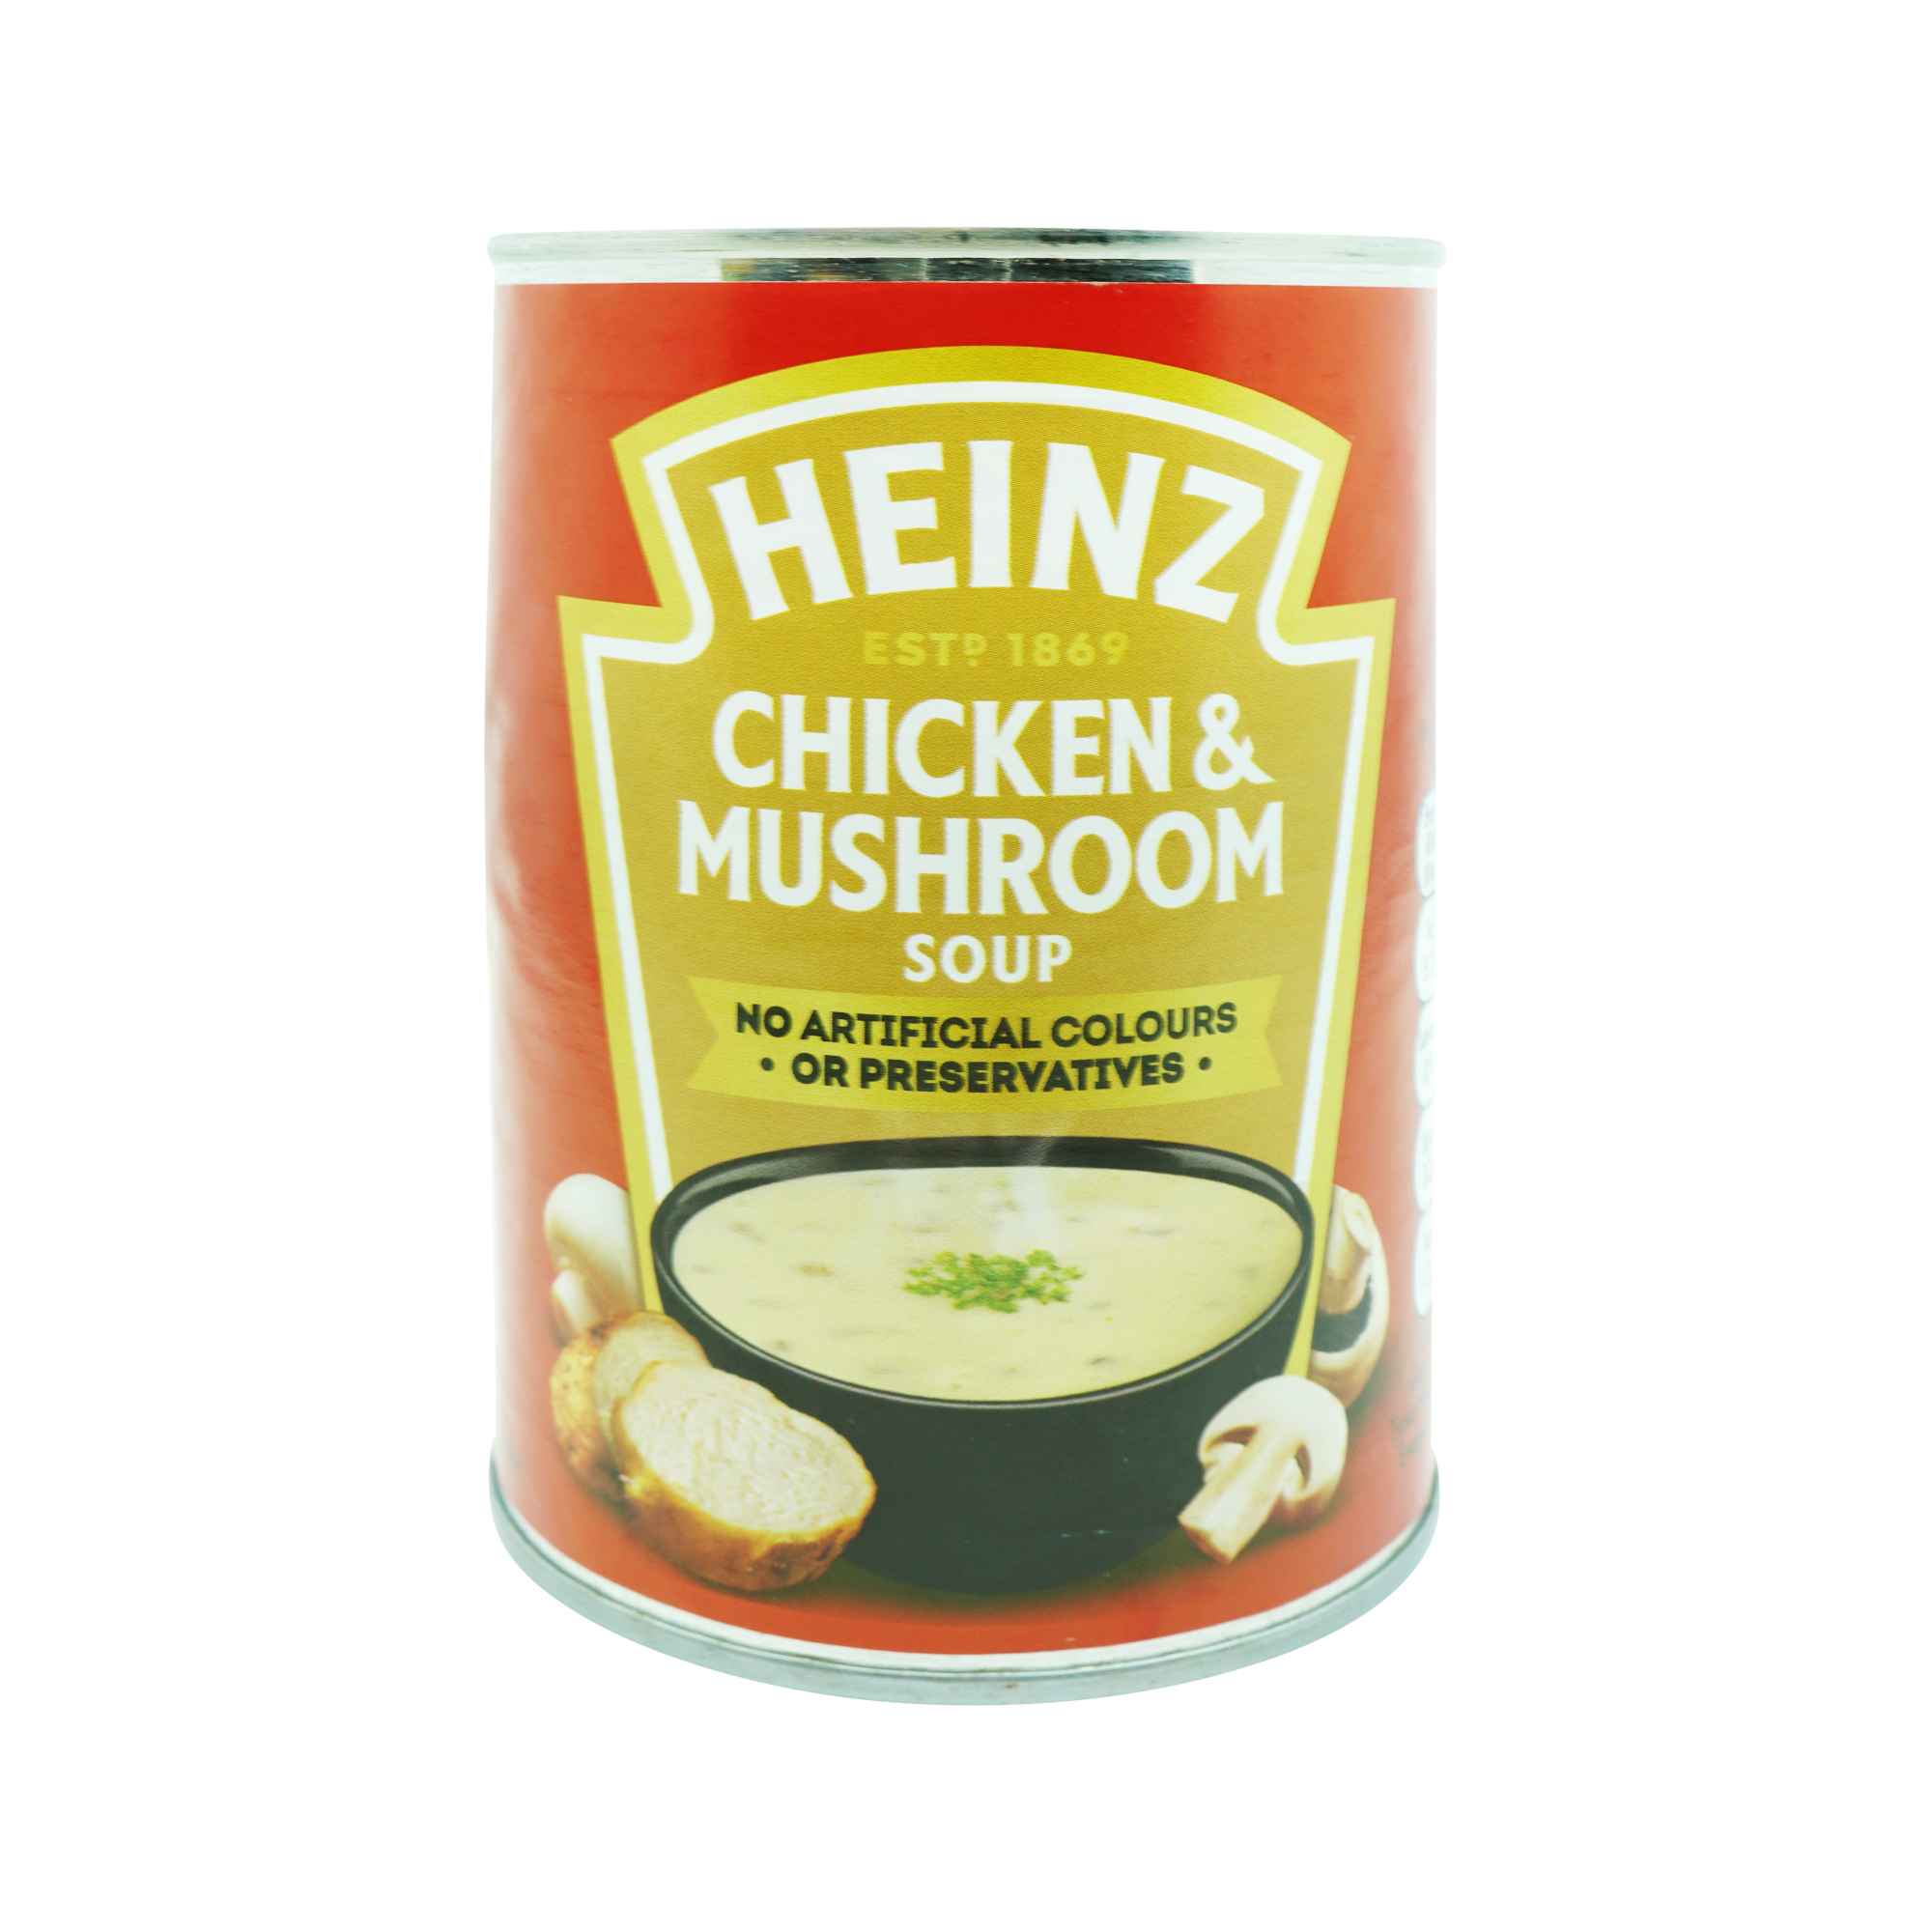 Heinz Classic Cream Chicken &Mushroom Soup (400g)